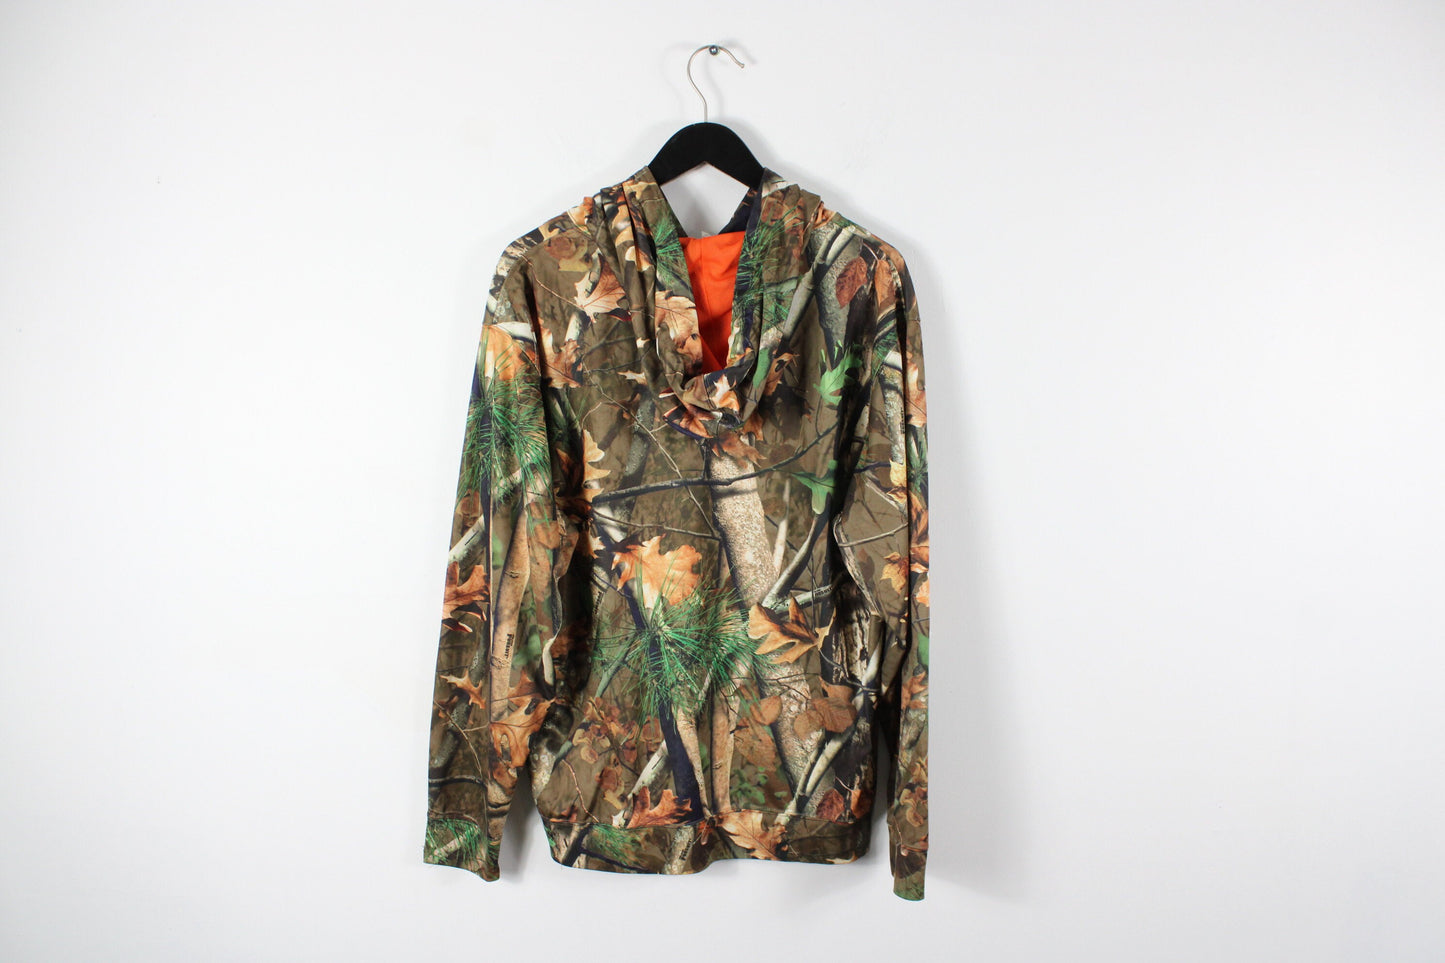 Polaris Camo Hoodie / Vintage 90s Camouflage Hunting Hoody Sweater / Hunter Hooded Sweatshirt Clothing